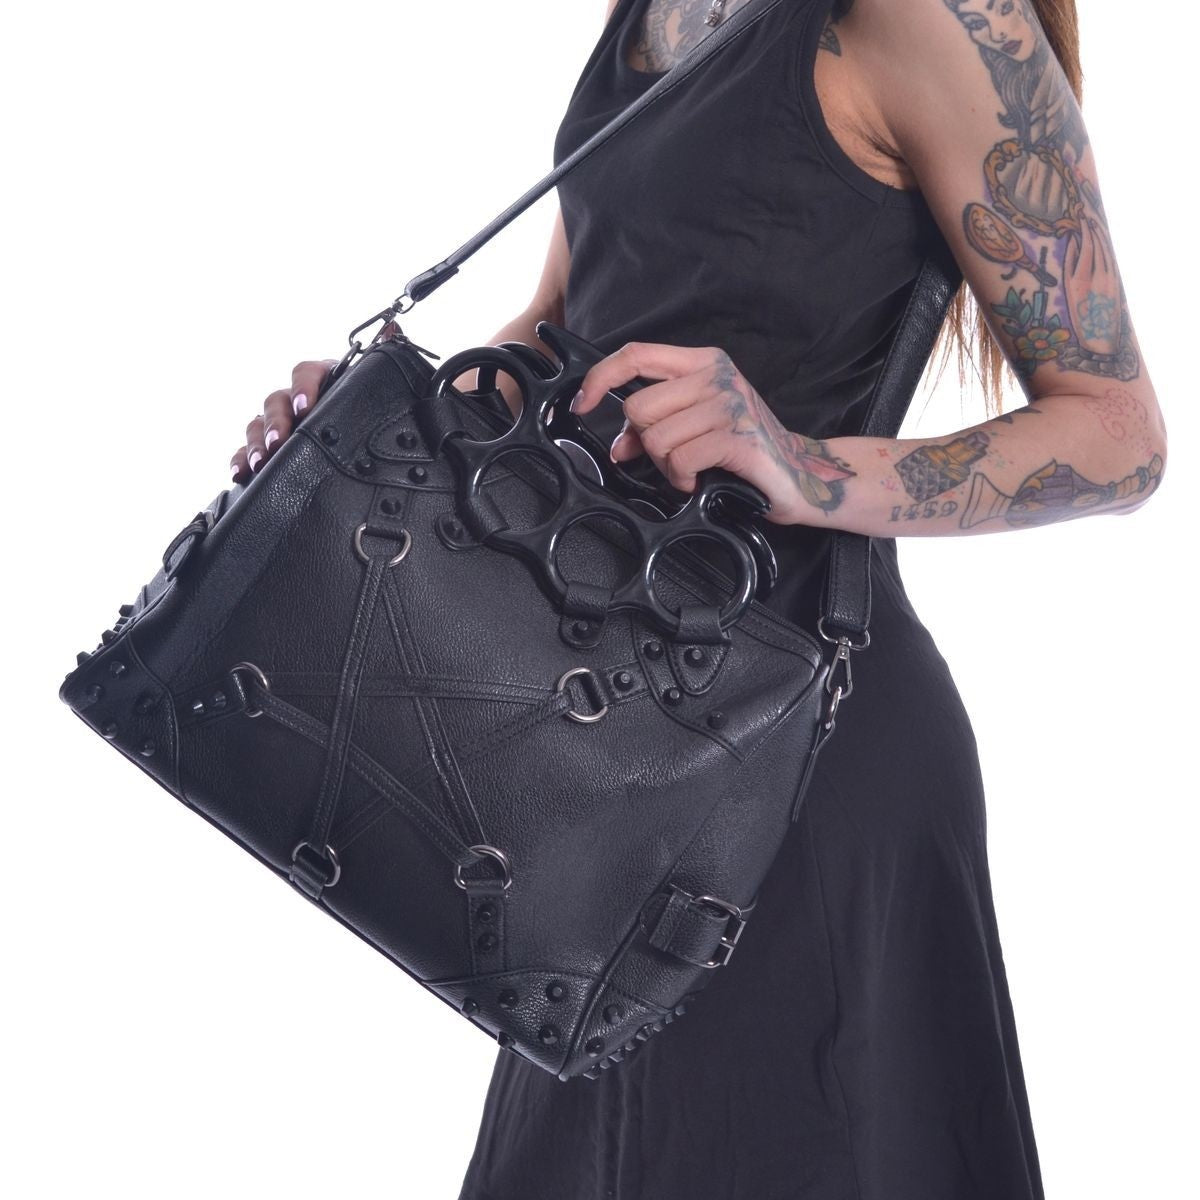 Vixxsin Pentacult Gothic Punk Studded Bag